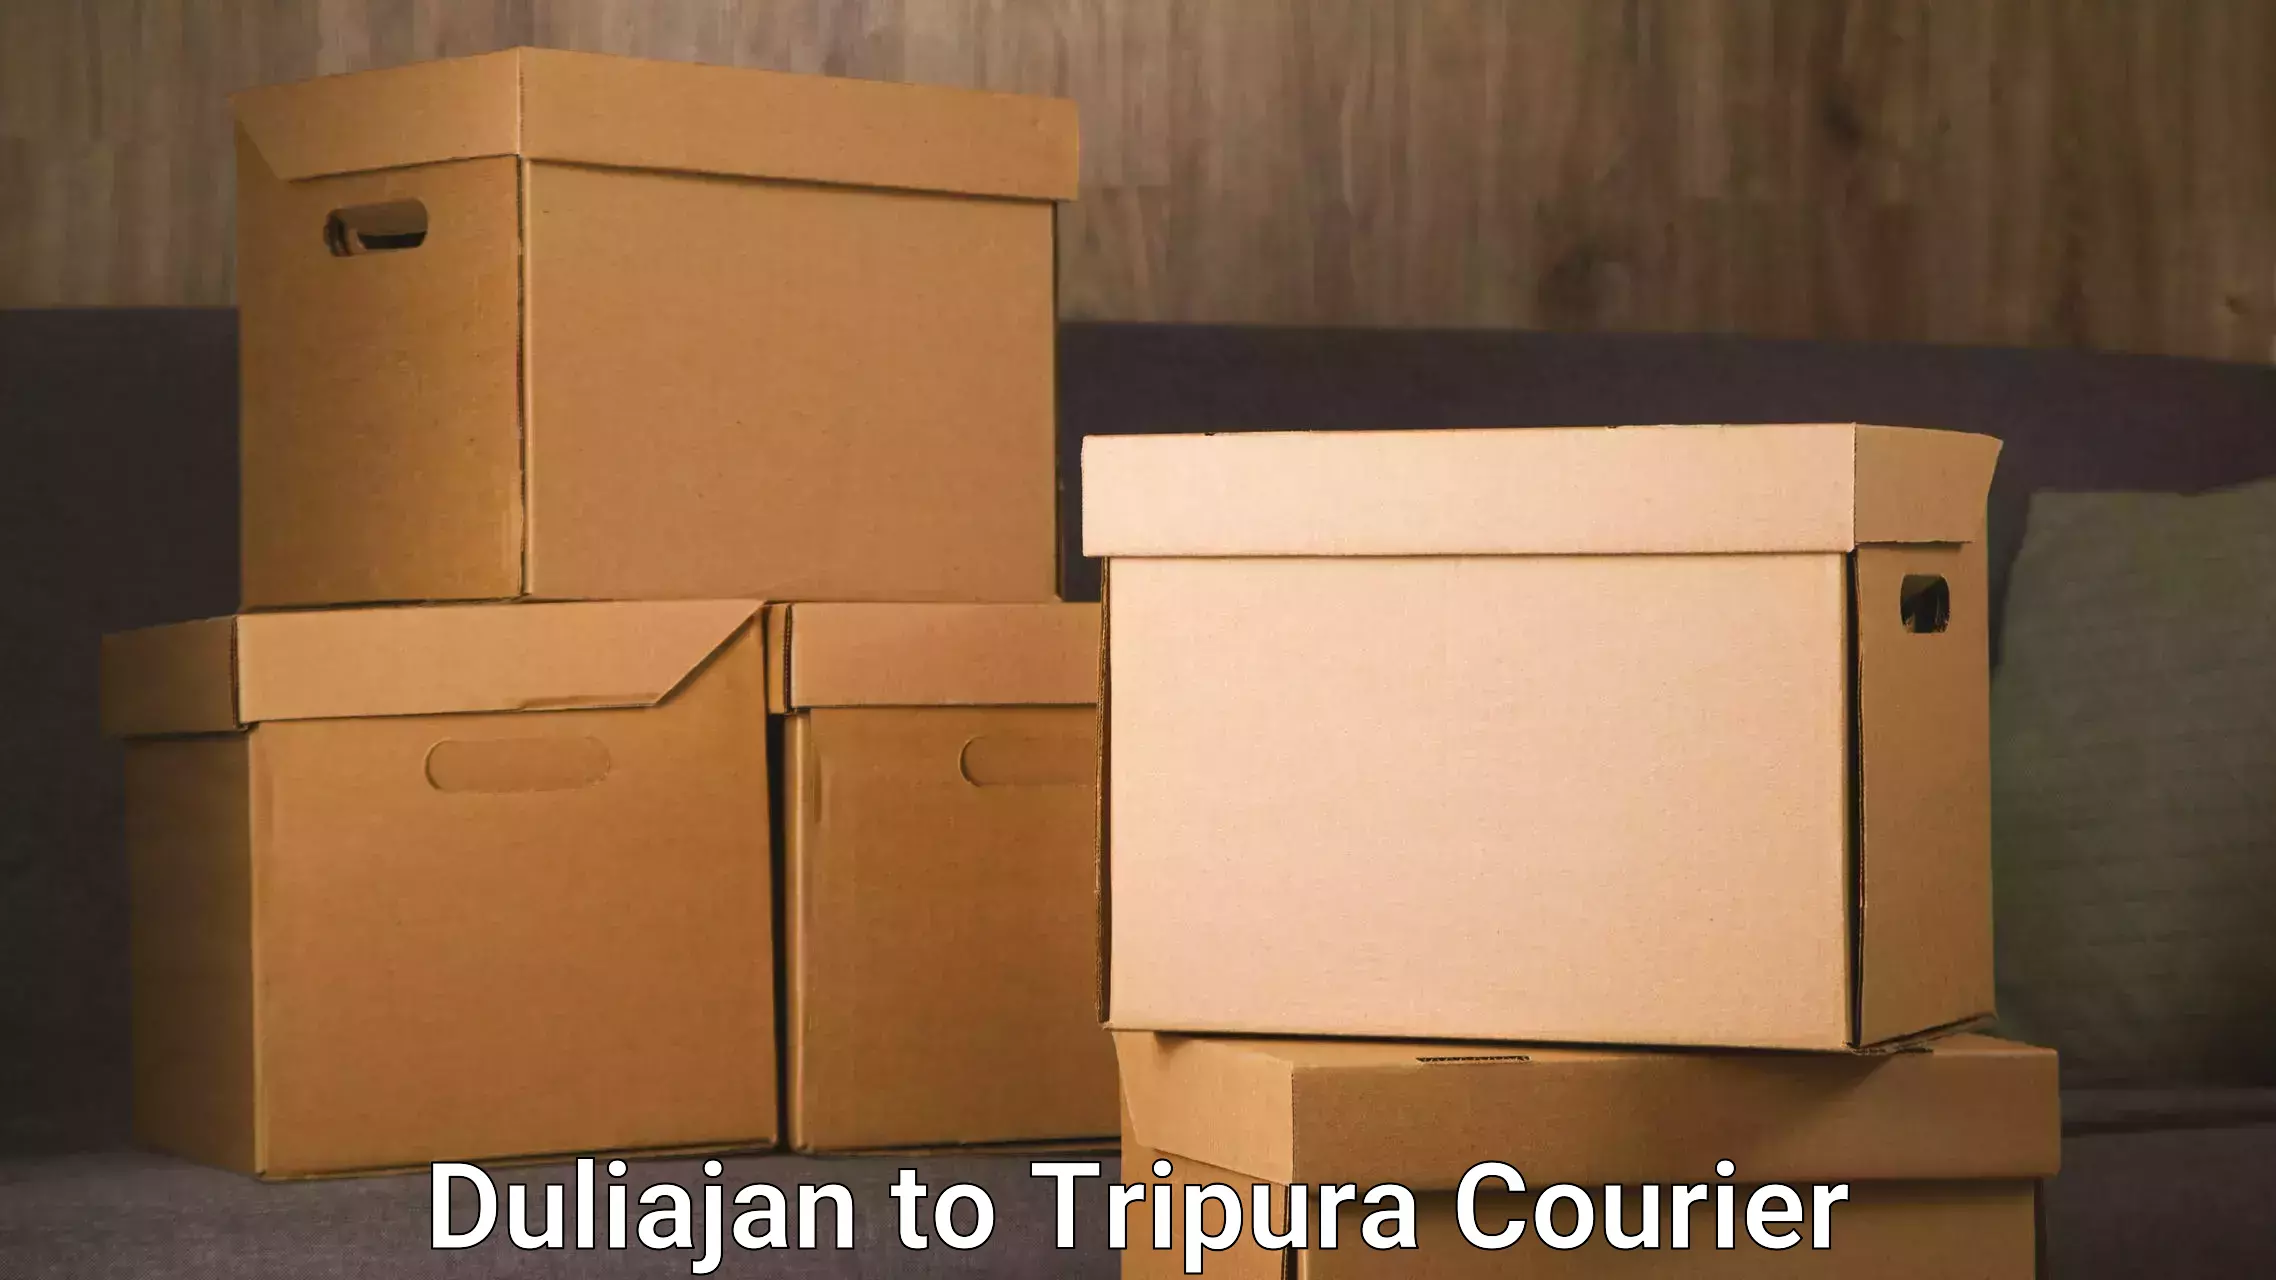 Full-service courier options Duliajan to Agartala